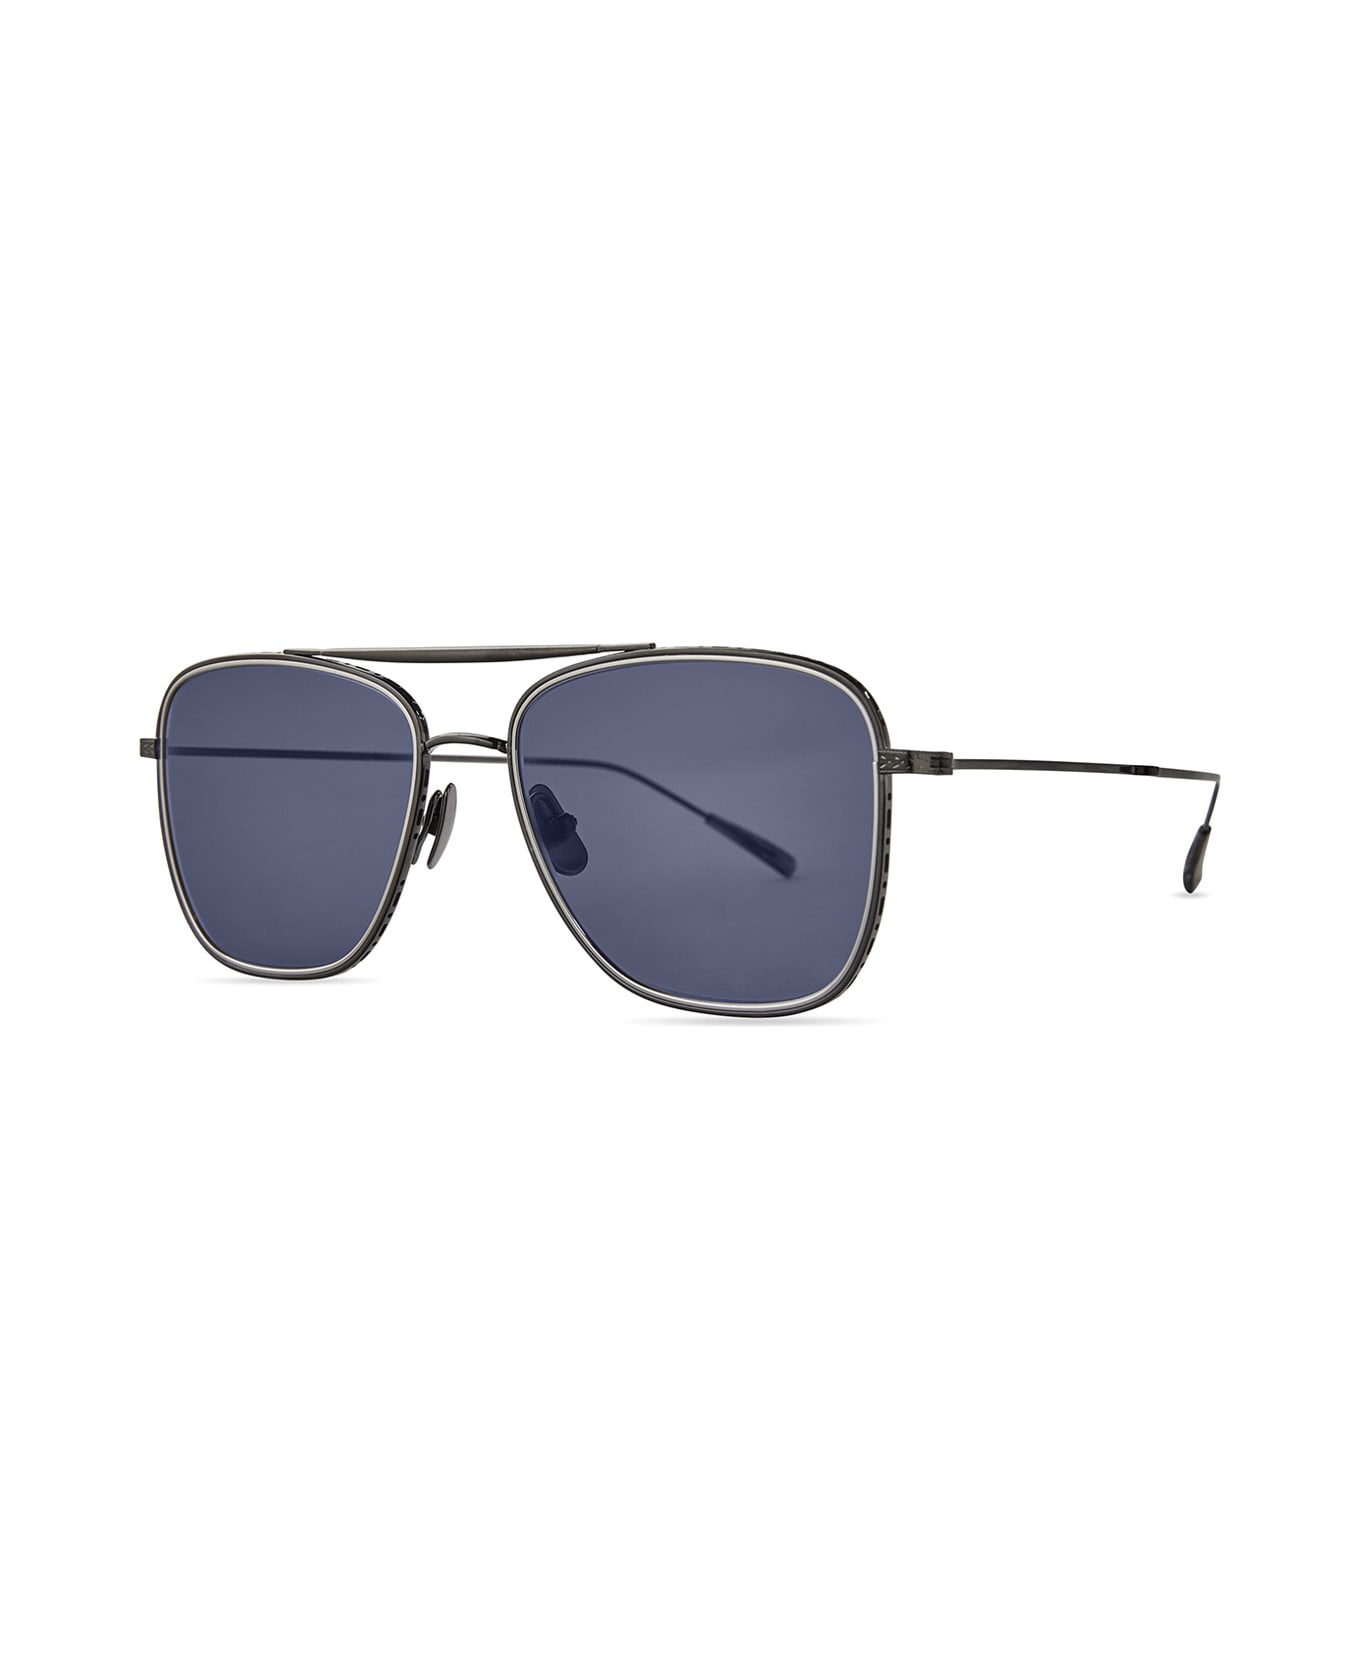 Mr. Leight Novarro S Gunmetal-coldwater/blue Sunglasses - Gunmetal-Coldwater/Blue サングラス